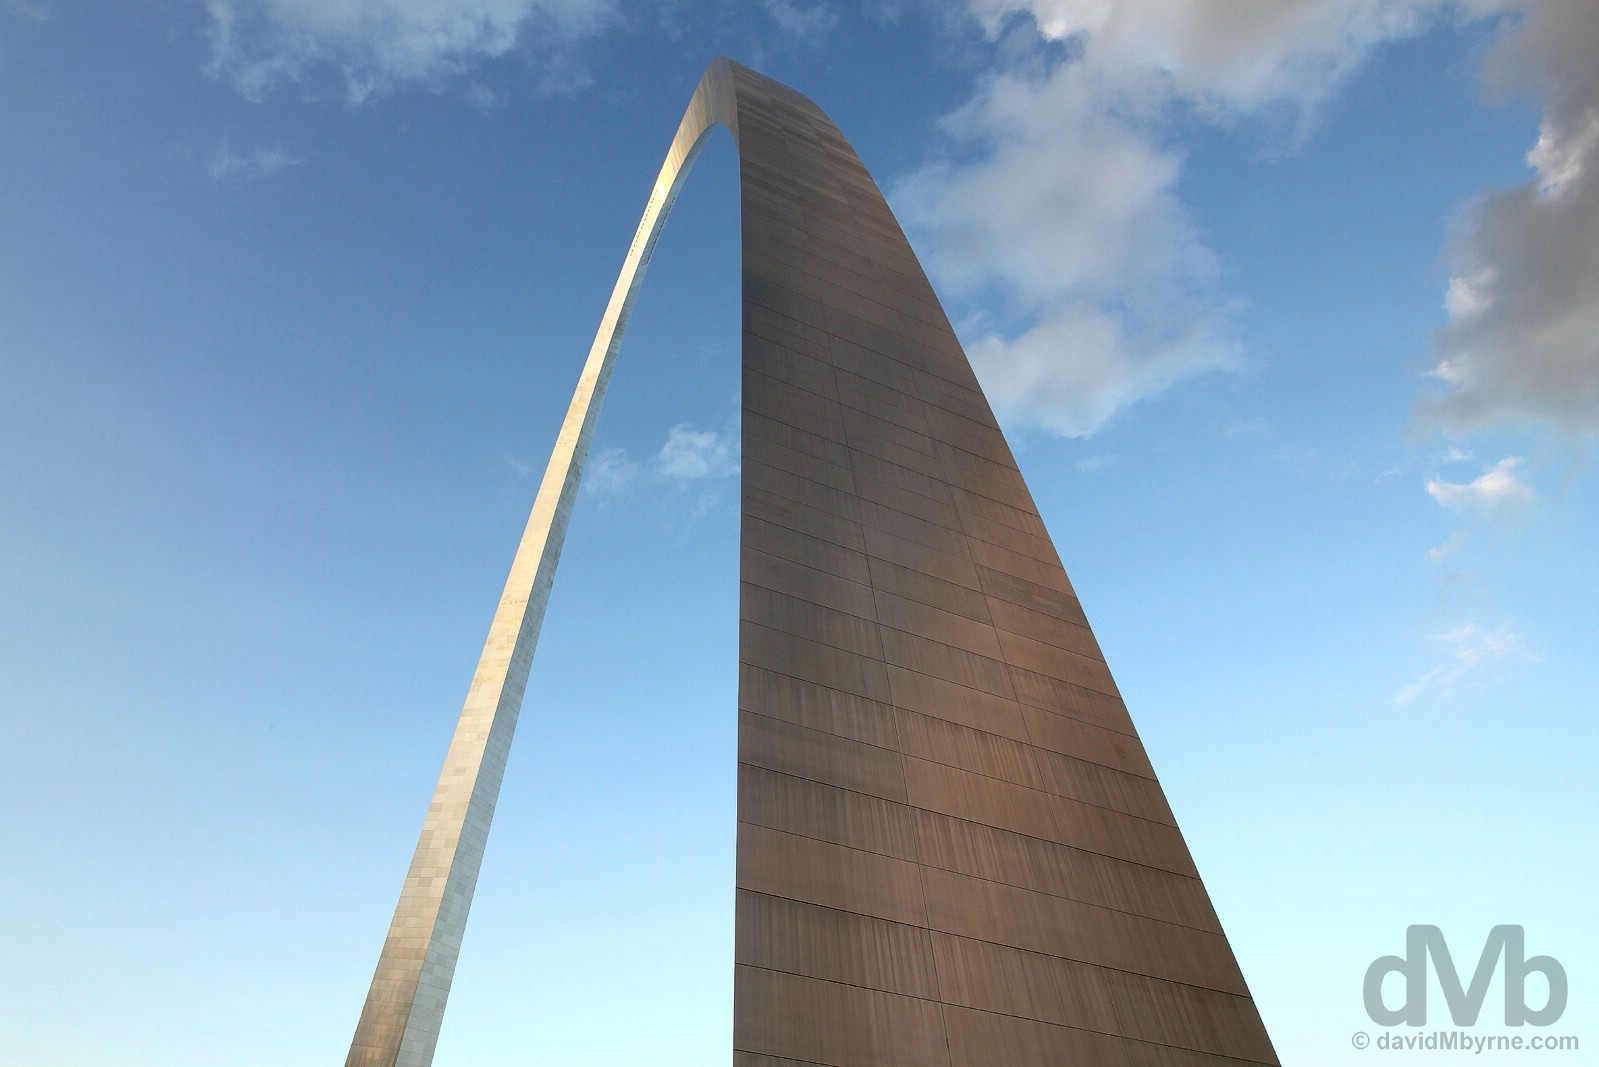 The Arch, St. Louis, Missouri, USA. September 17, 2016. 